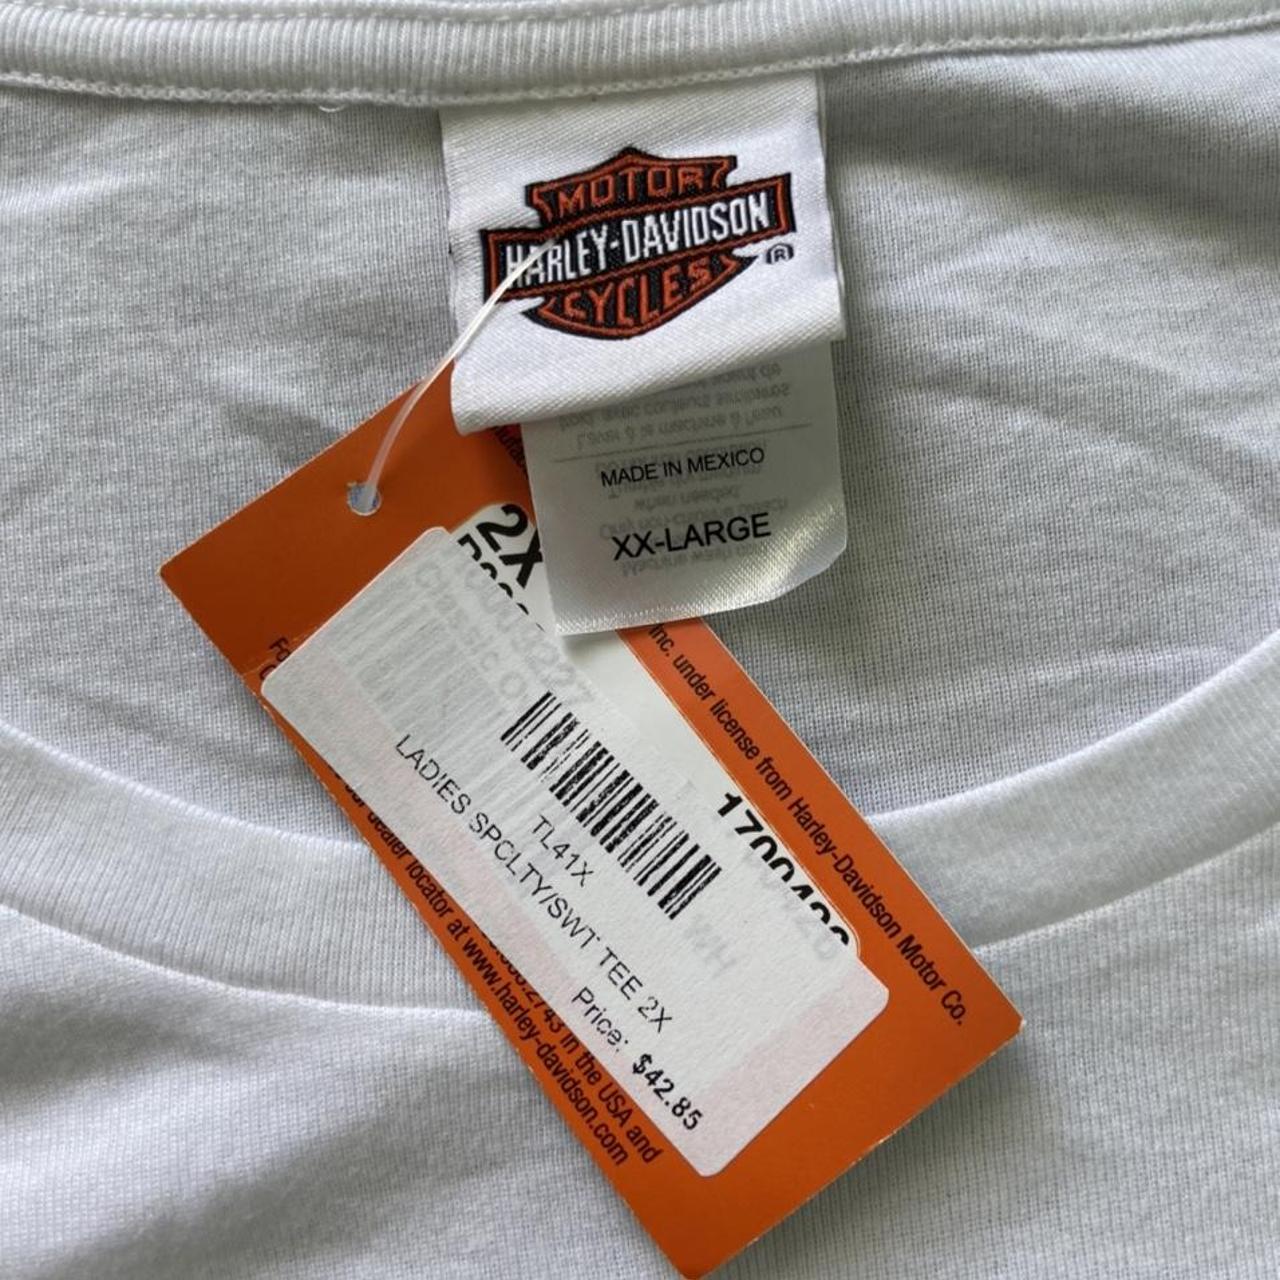 Harley Davidson Women's White and Orange T-shirt (2)